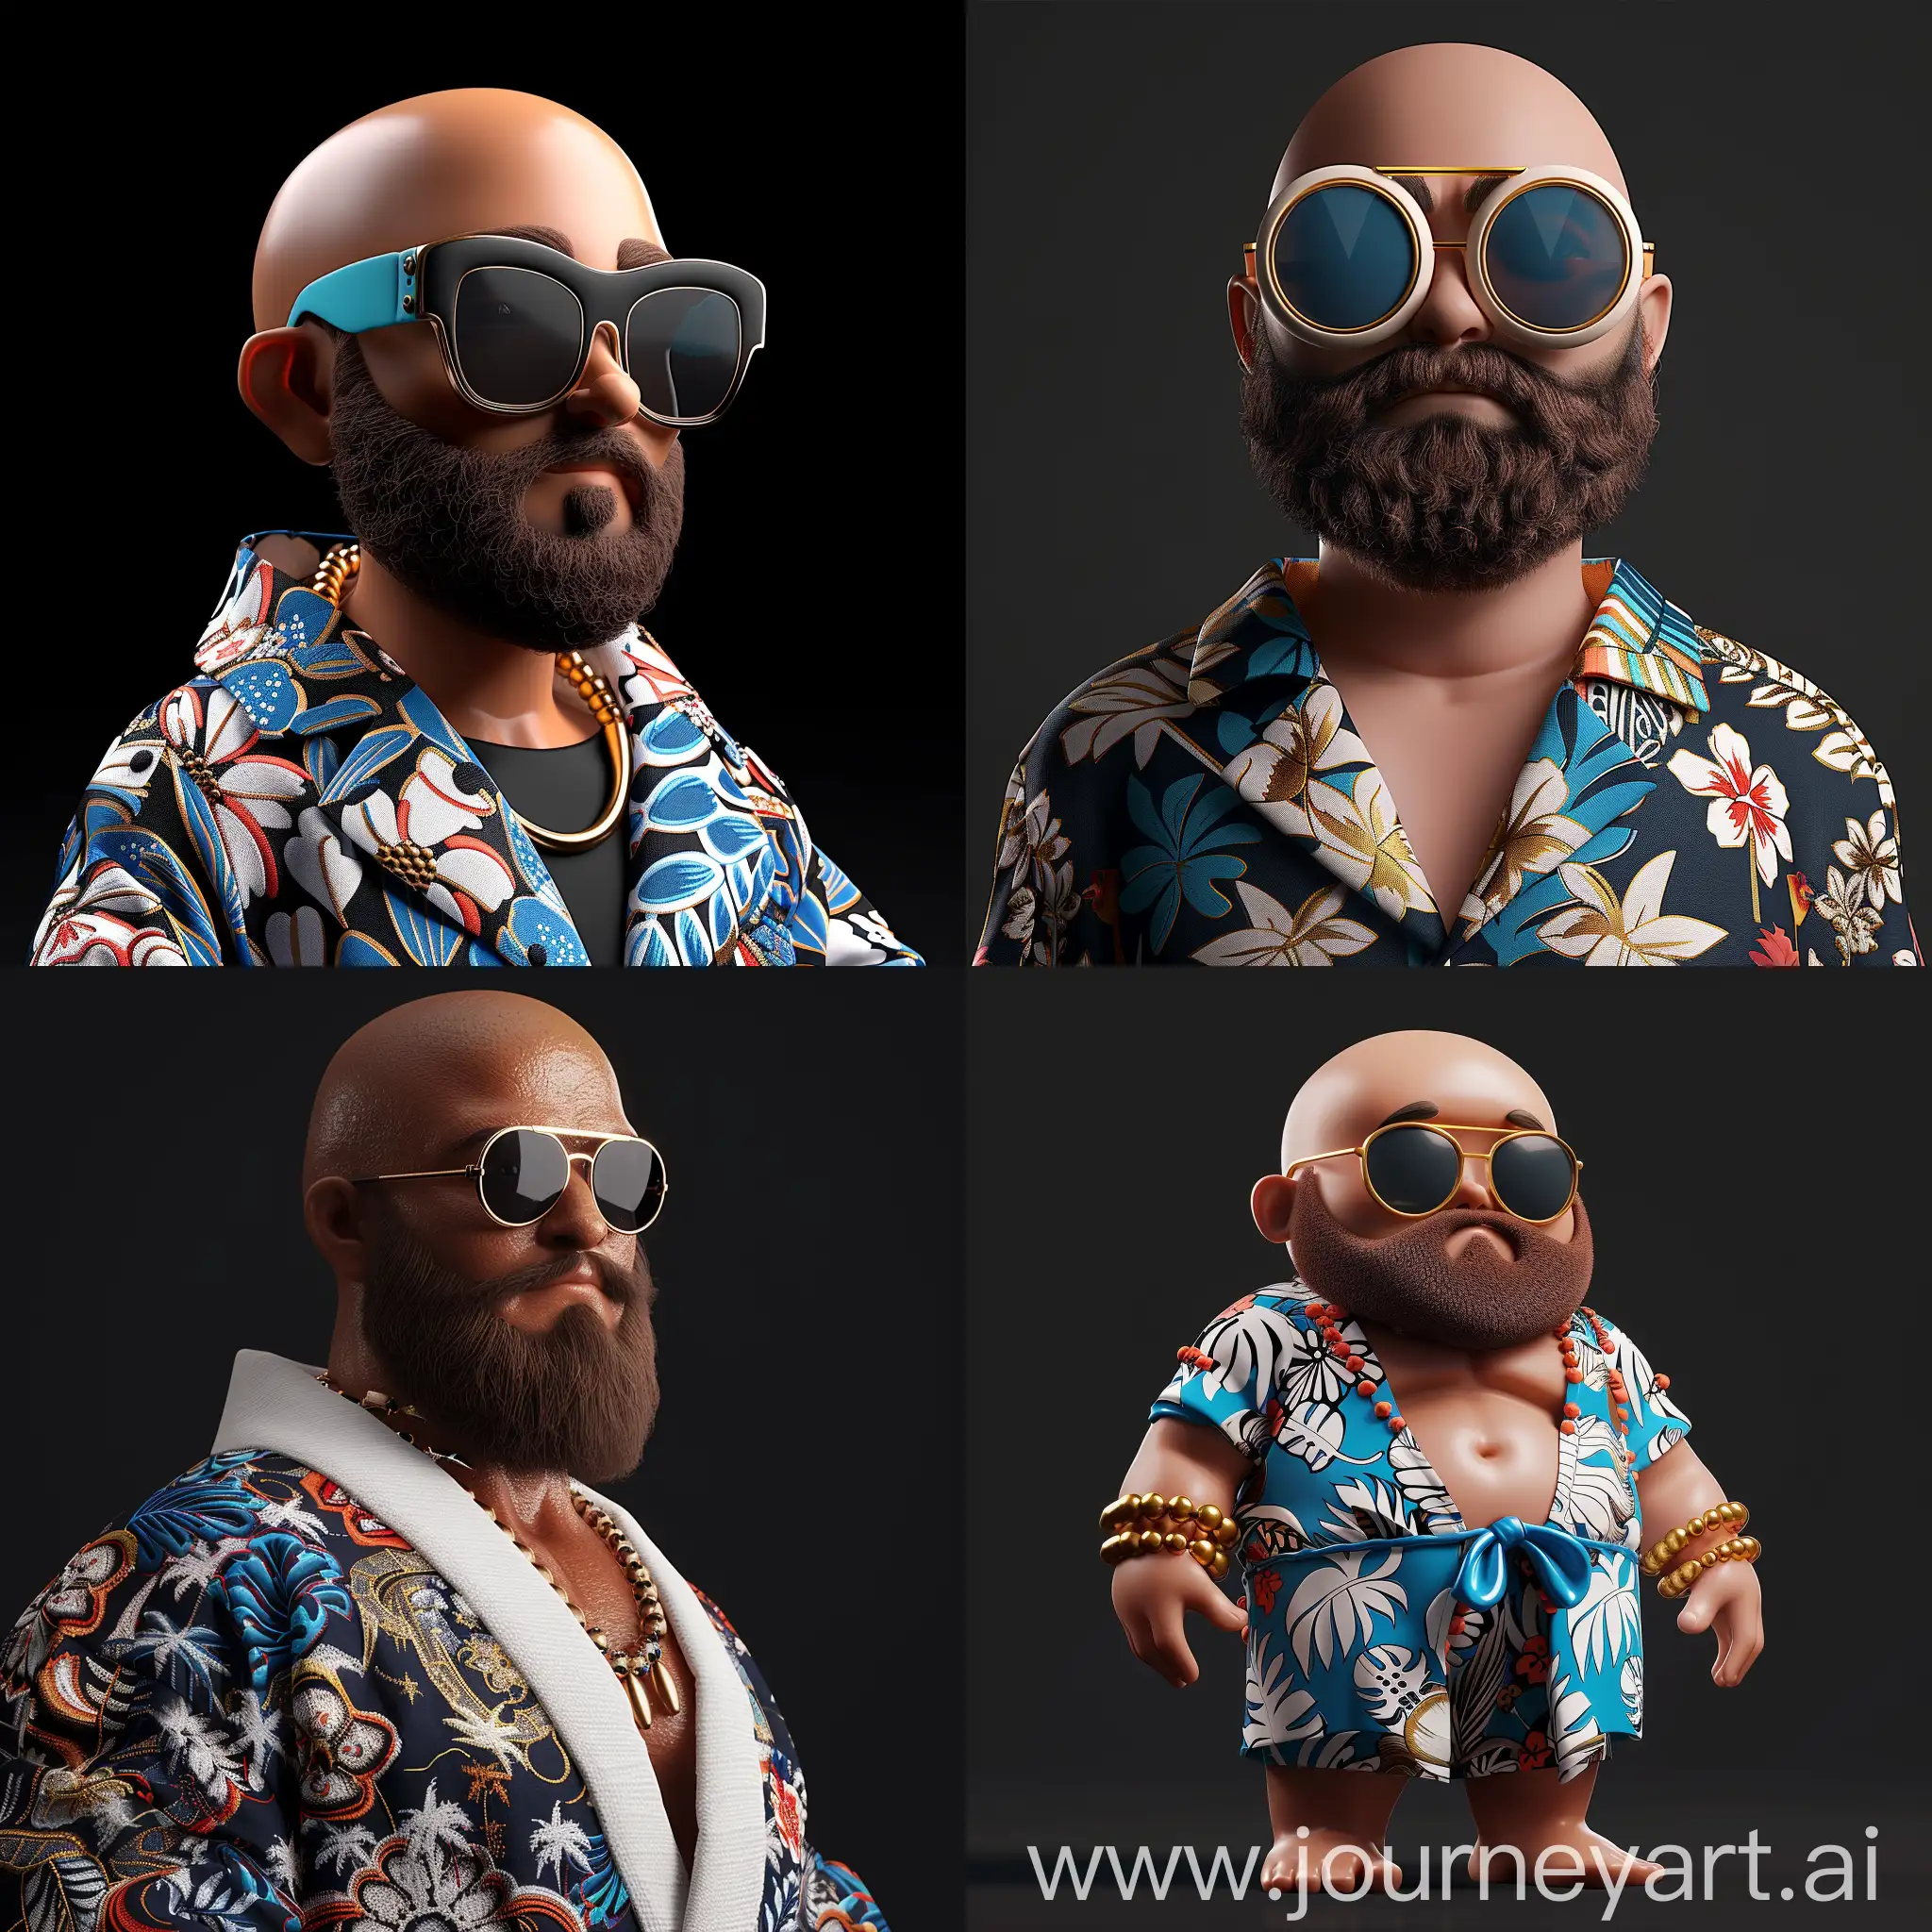 Minimalist-3D-Render-Bald-Man-in-Hawaiian-Attire-with-Sunglasses-on-Black-Background